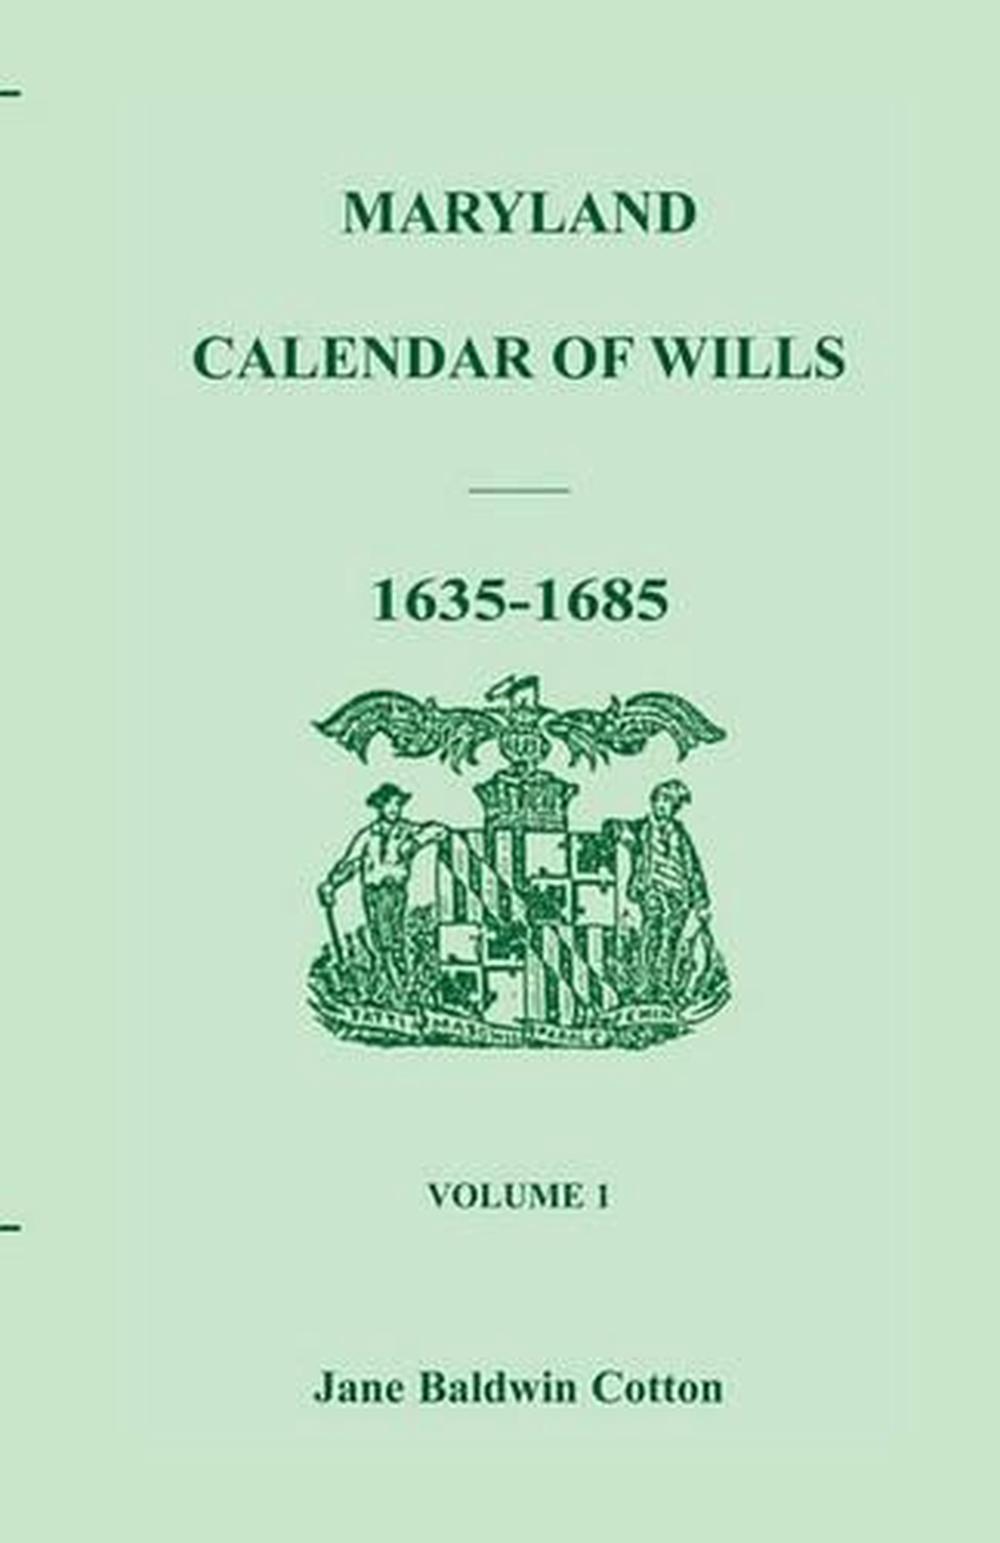 Maryland Calendar of Wills, Volume 1 16351685 by Jane Baldwin Cotton